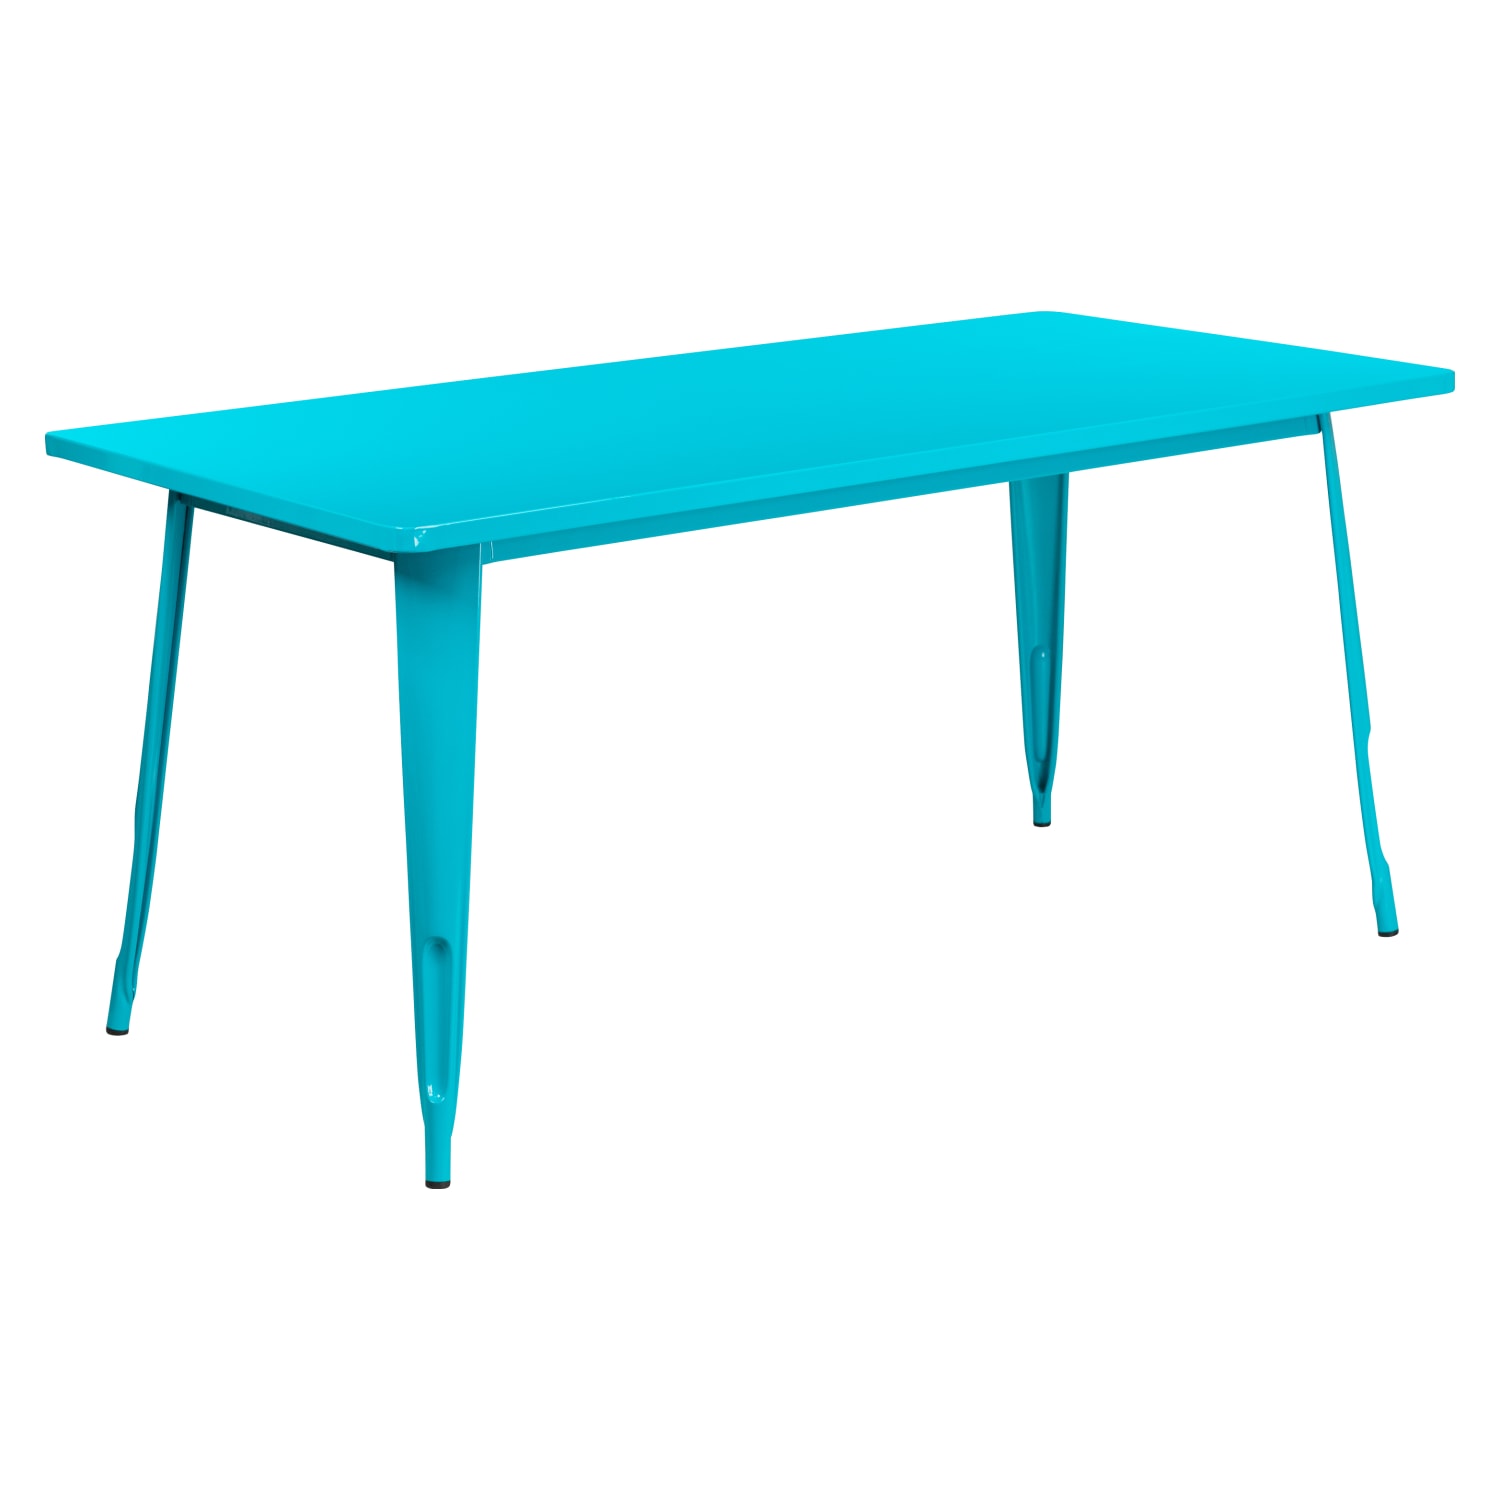 31.5” x 63” Rectangular Crystal Teal-Blue Metal Indoor-Outdoor Table